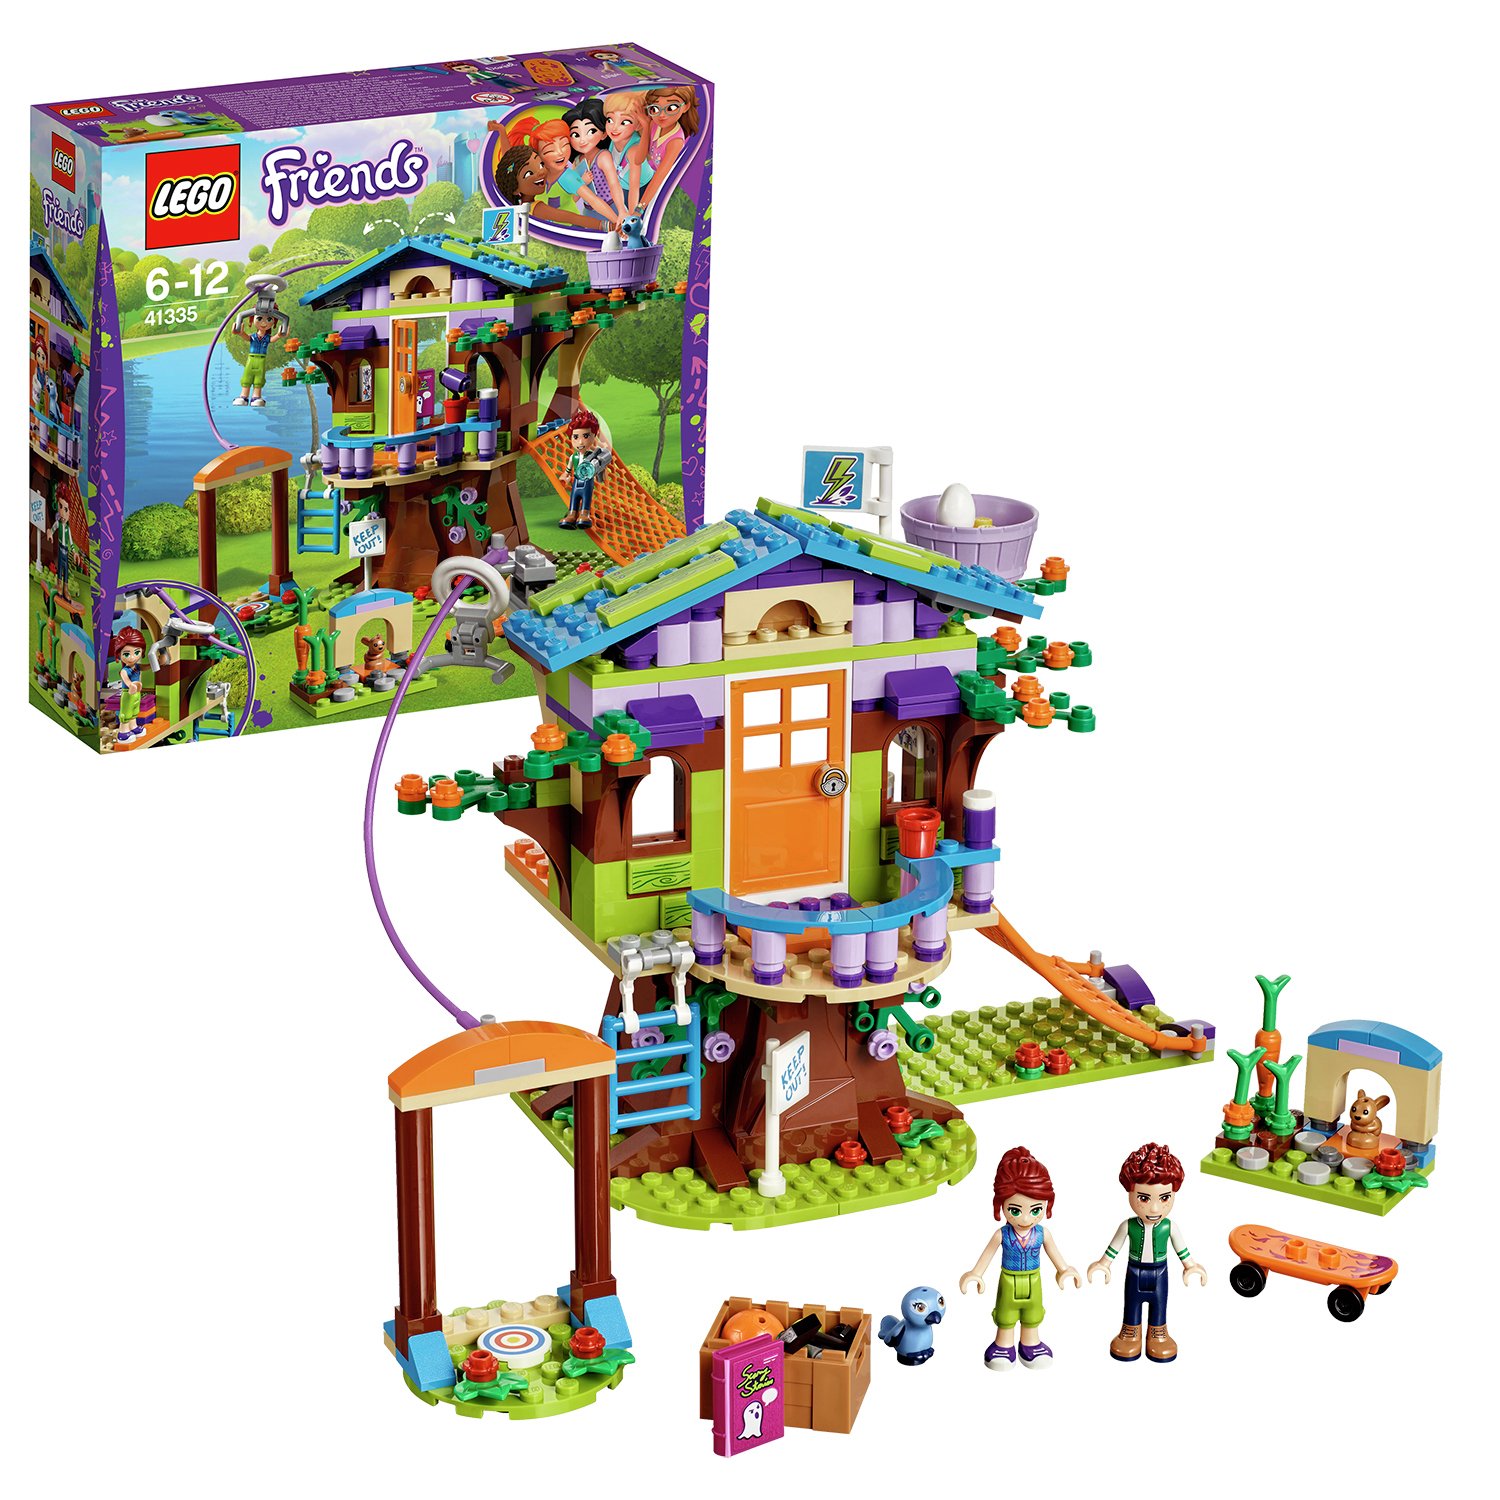 LEGO Friends Mia's Tree House - 41335